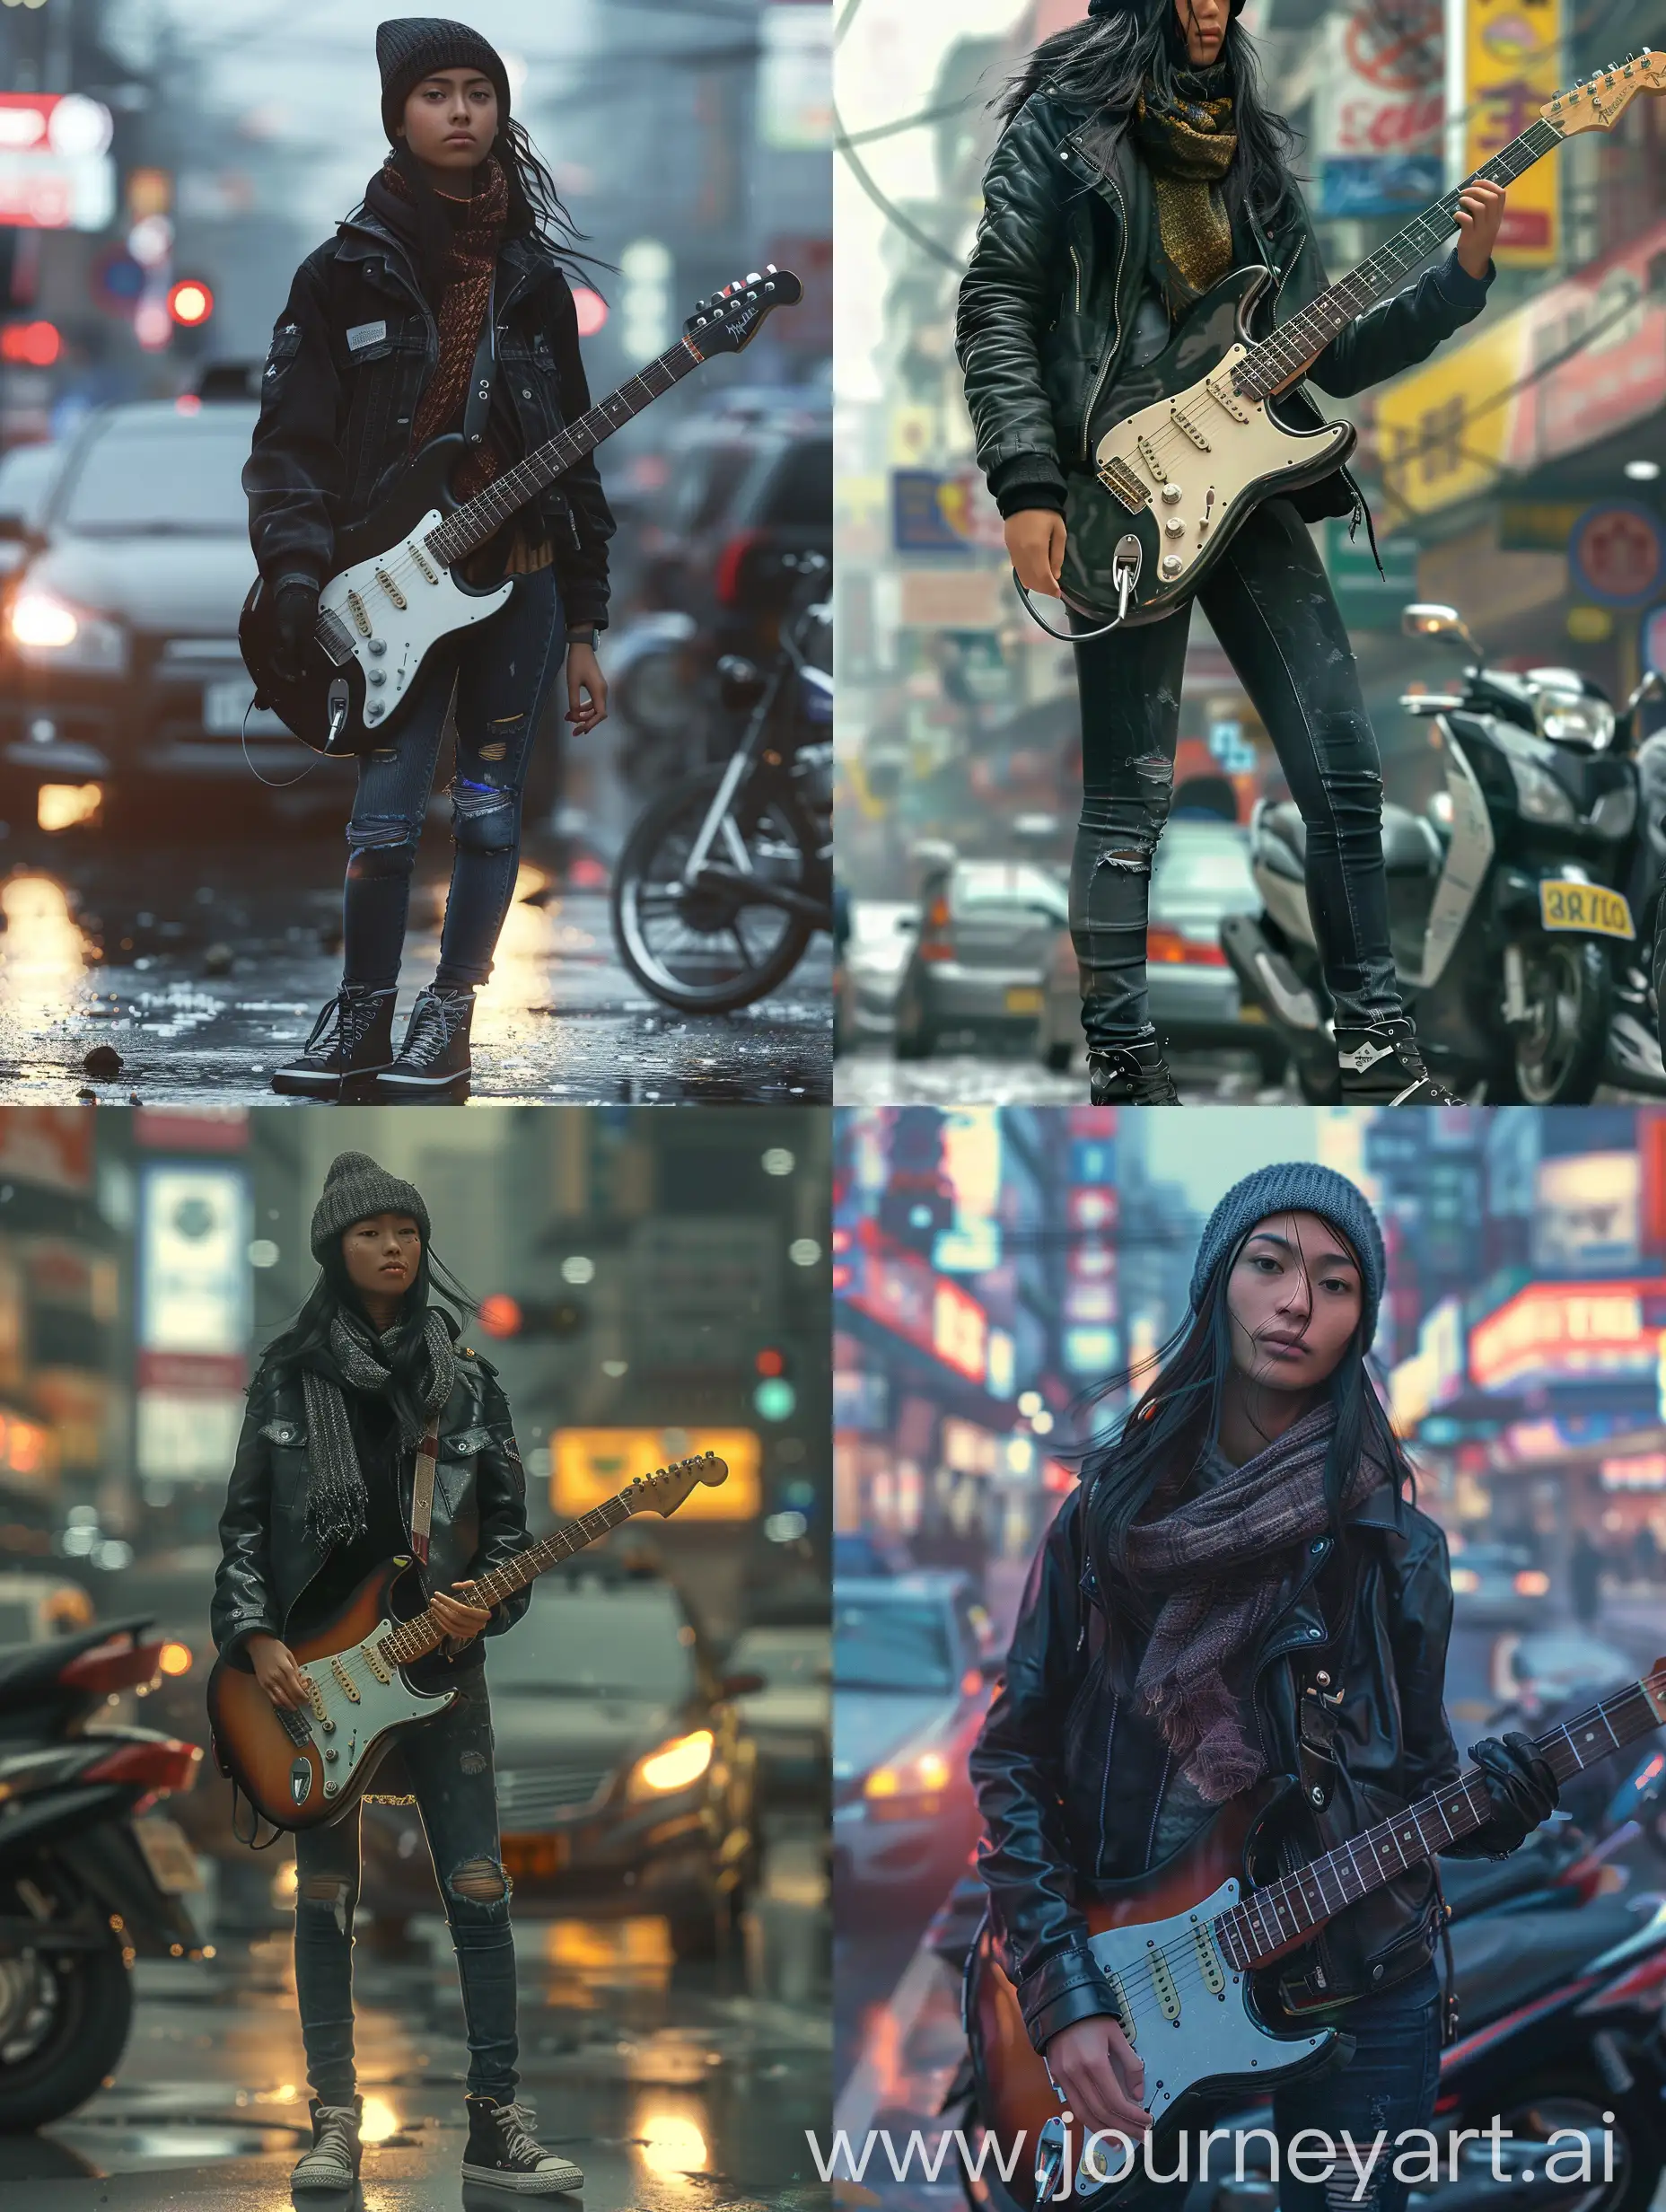 Indonesian-Woman-Playing-Guitar-in-Urban-Setting